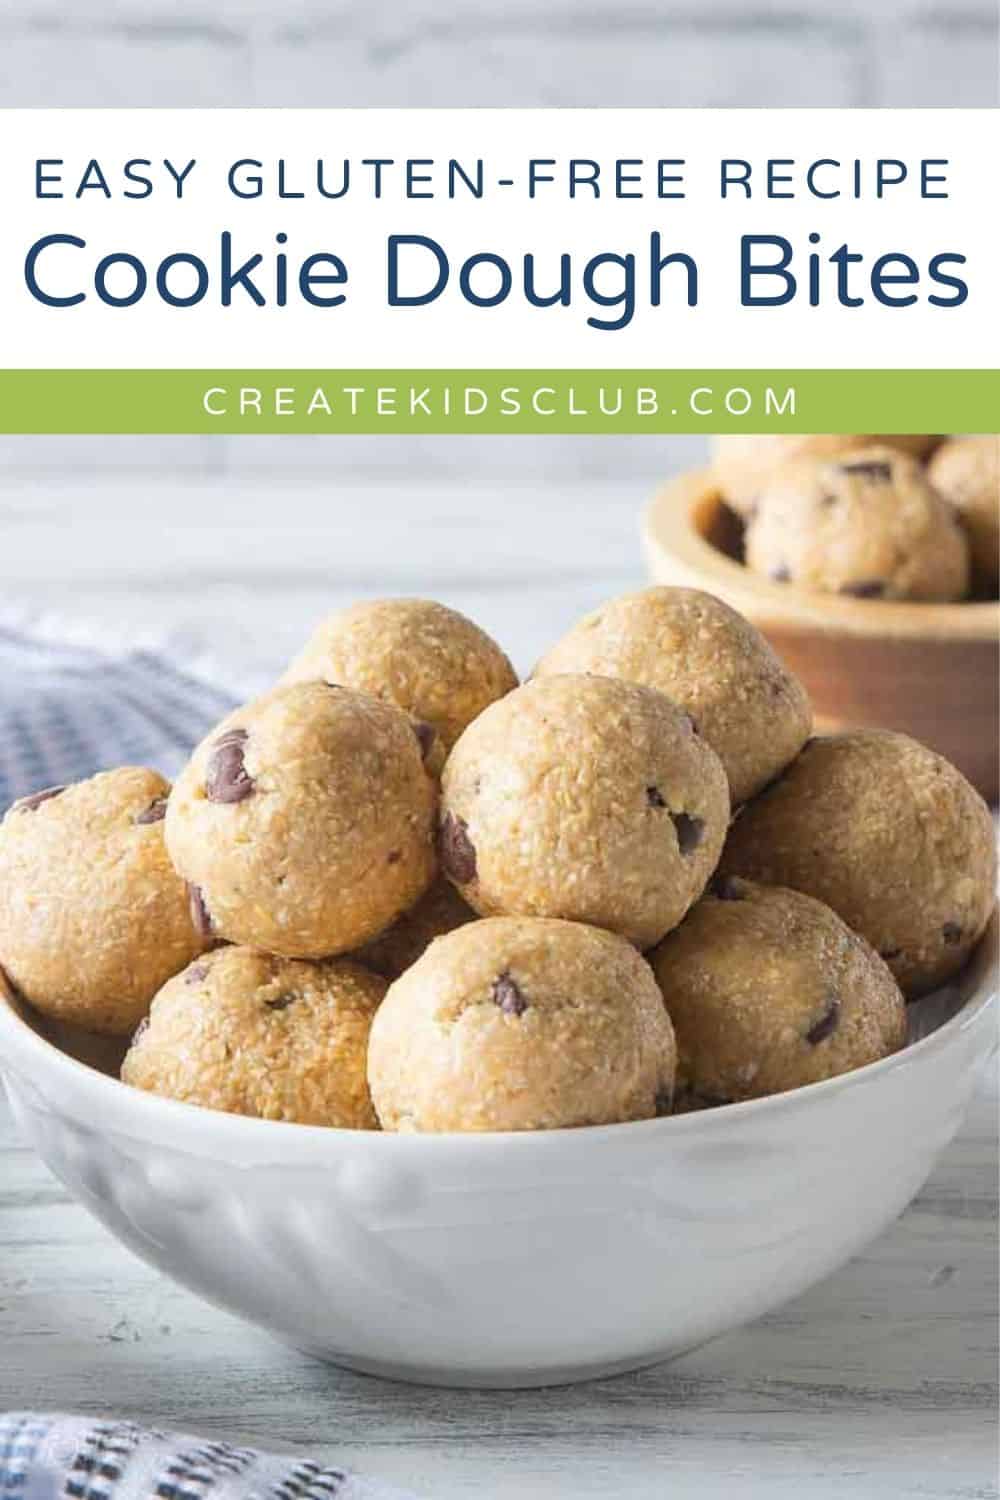 No bake cookie dough bites shown in a bowl.